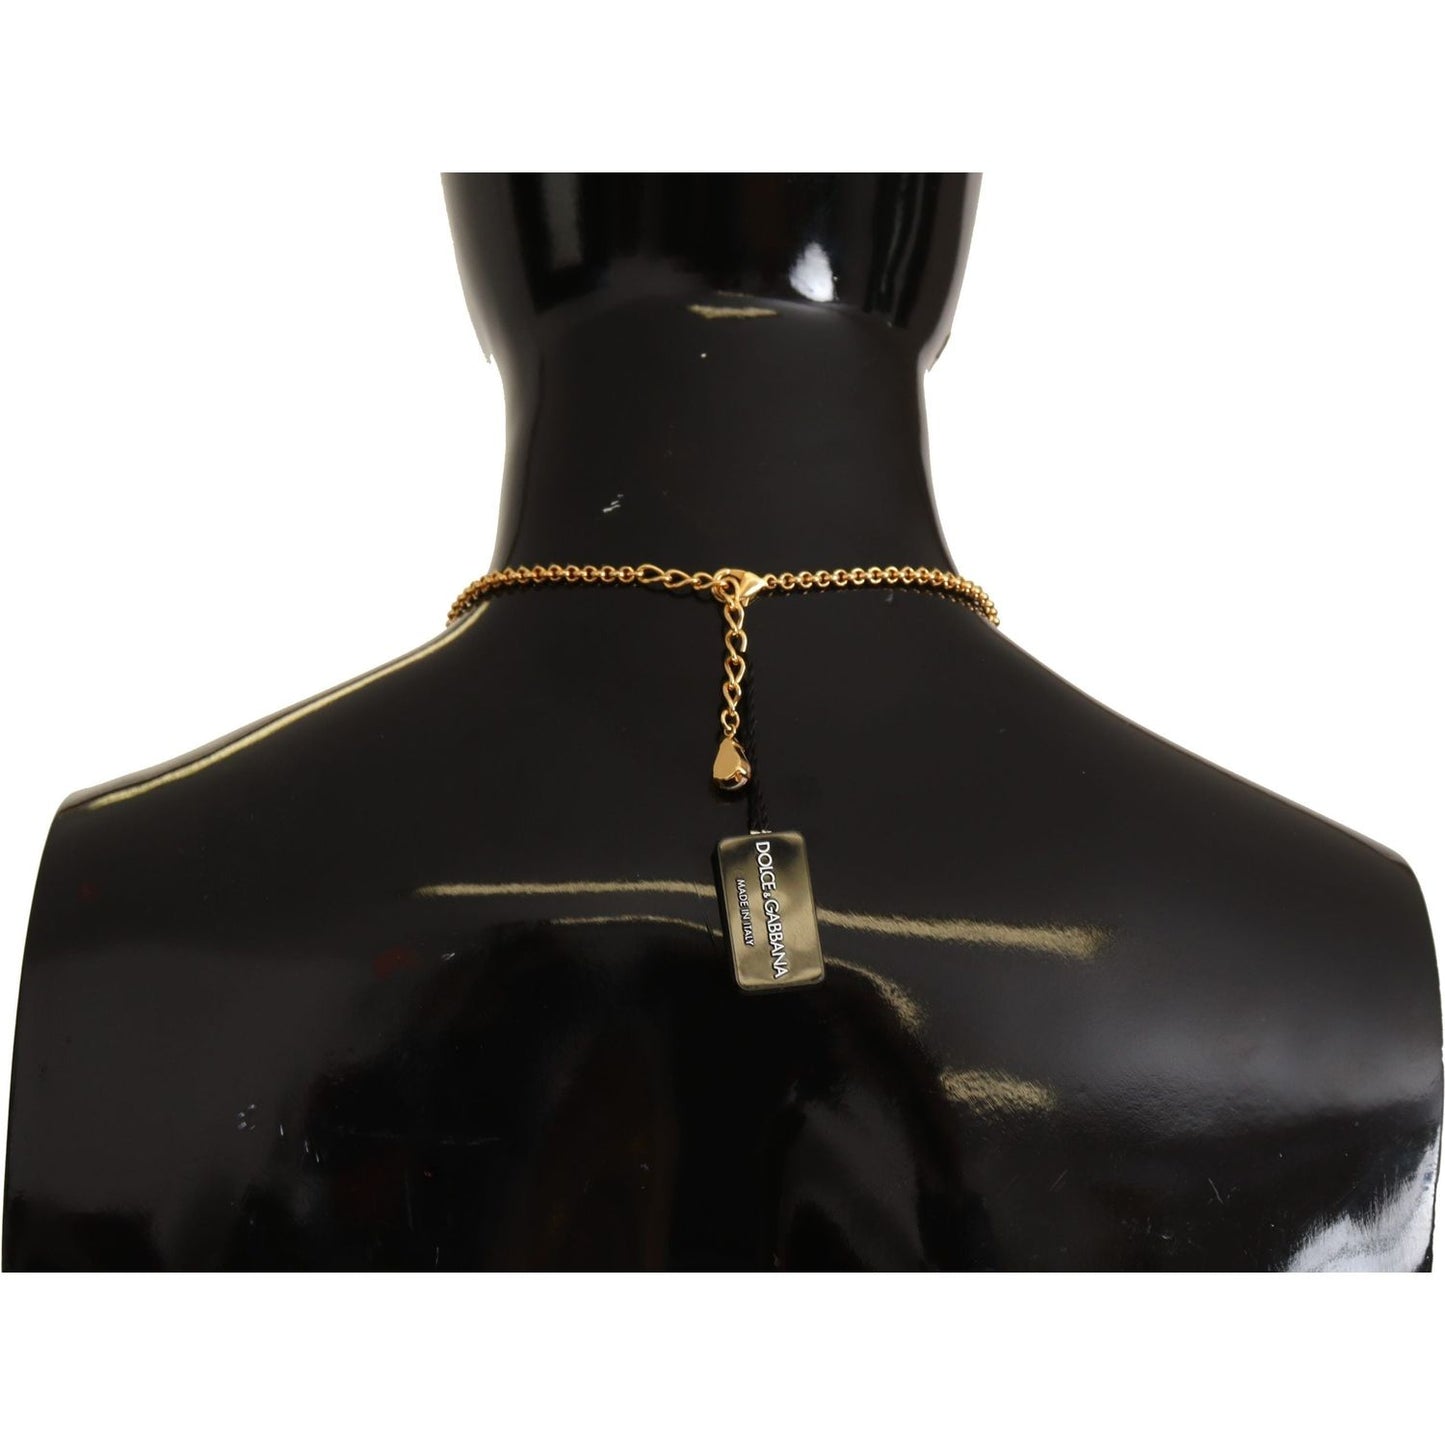 Dolce & Gabbana Glamorous Gold Crystal Charm Necklace gold-rose-love-crystal-charm-chain-necklace WOMAN NECKLACE IMG_7947-scaled-e7665cd1-326.jpg